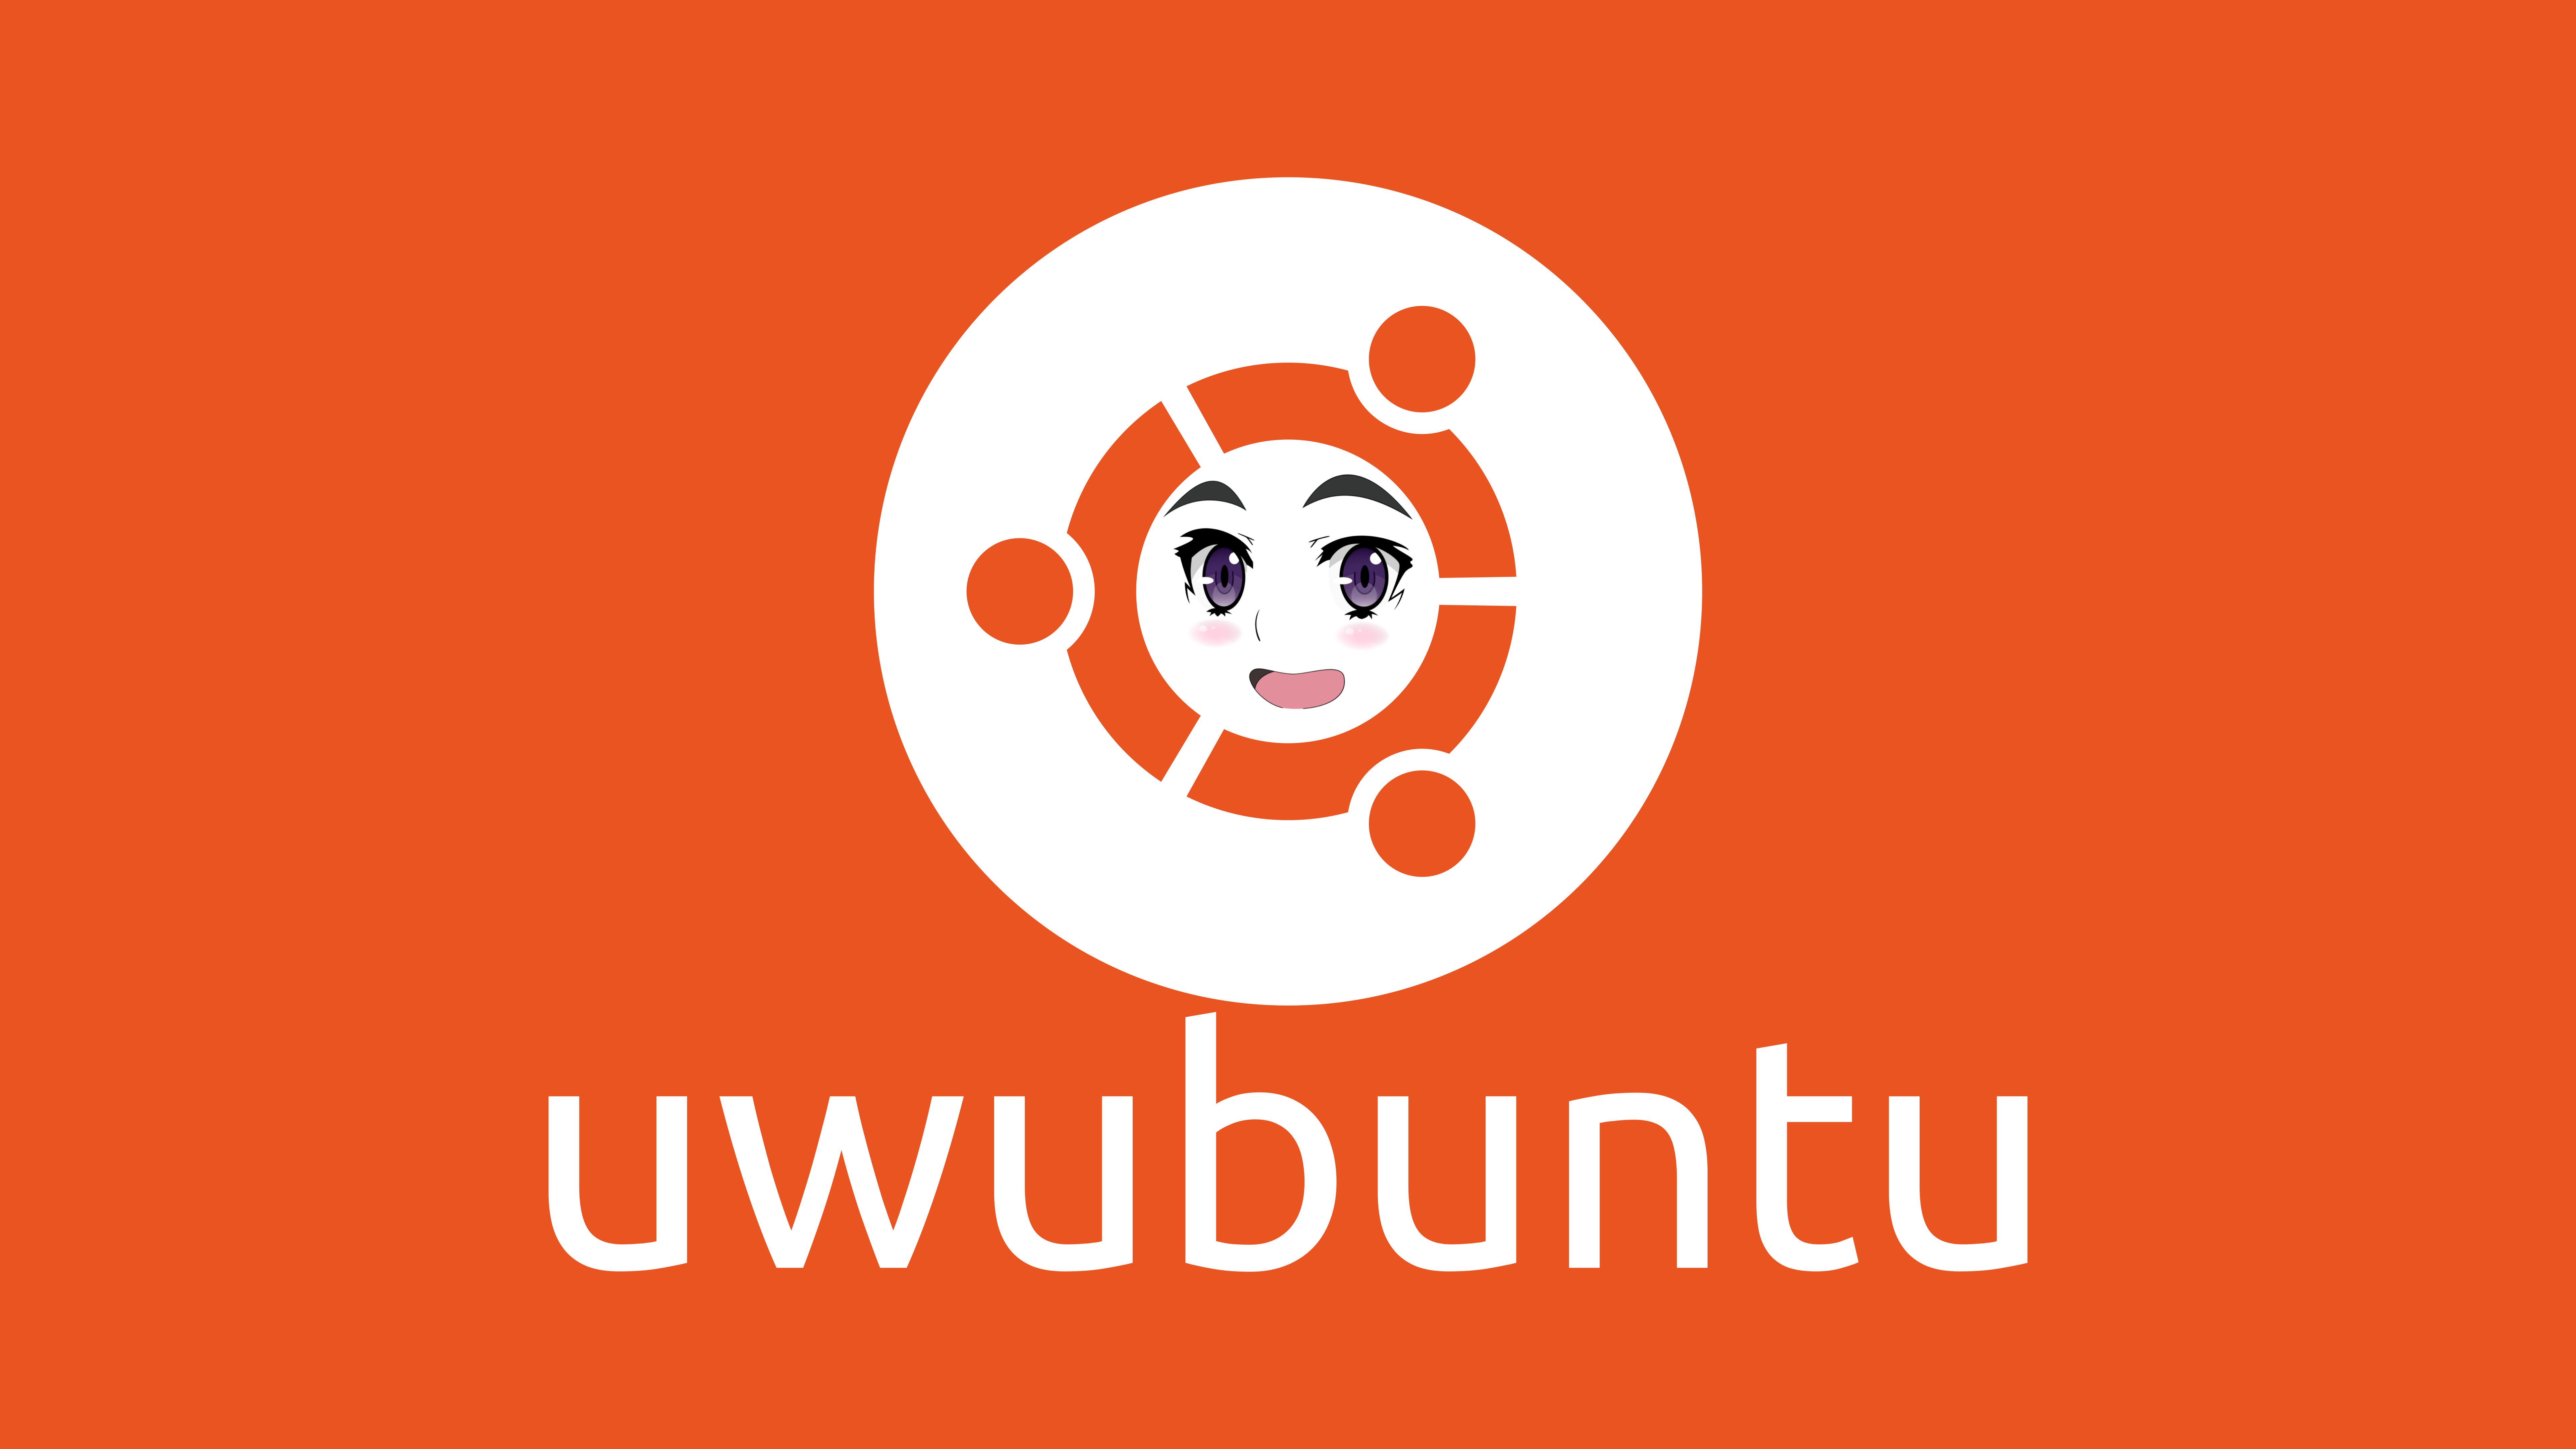 uwubuntu Wallpaper